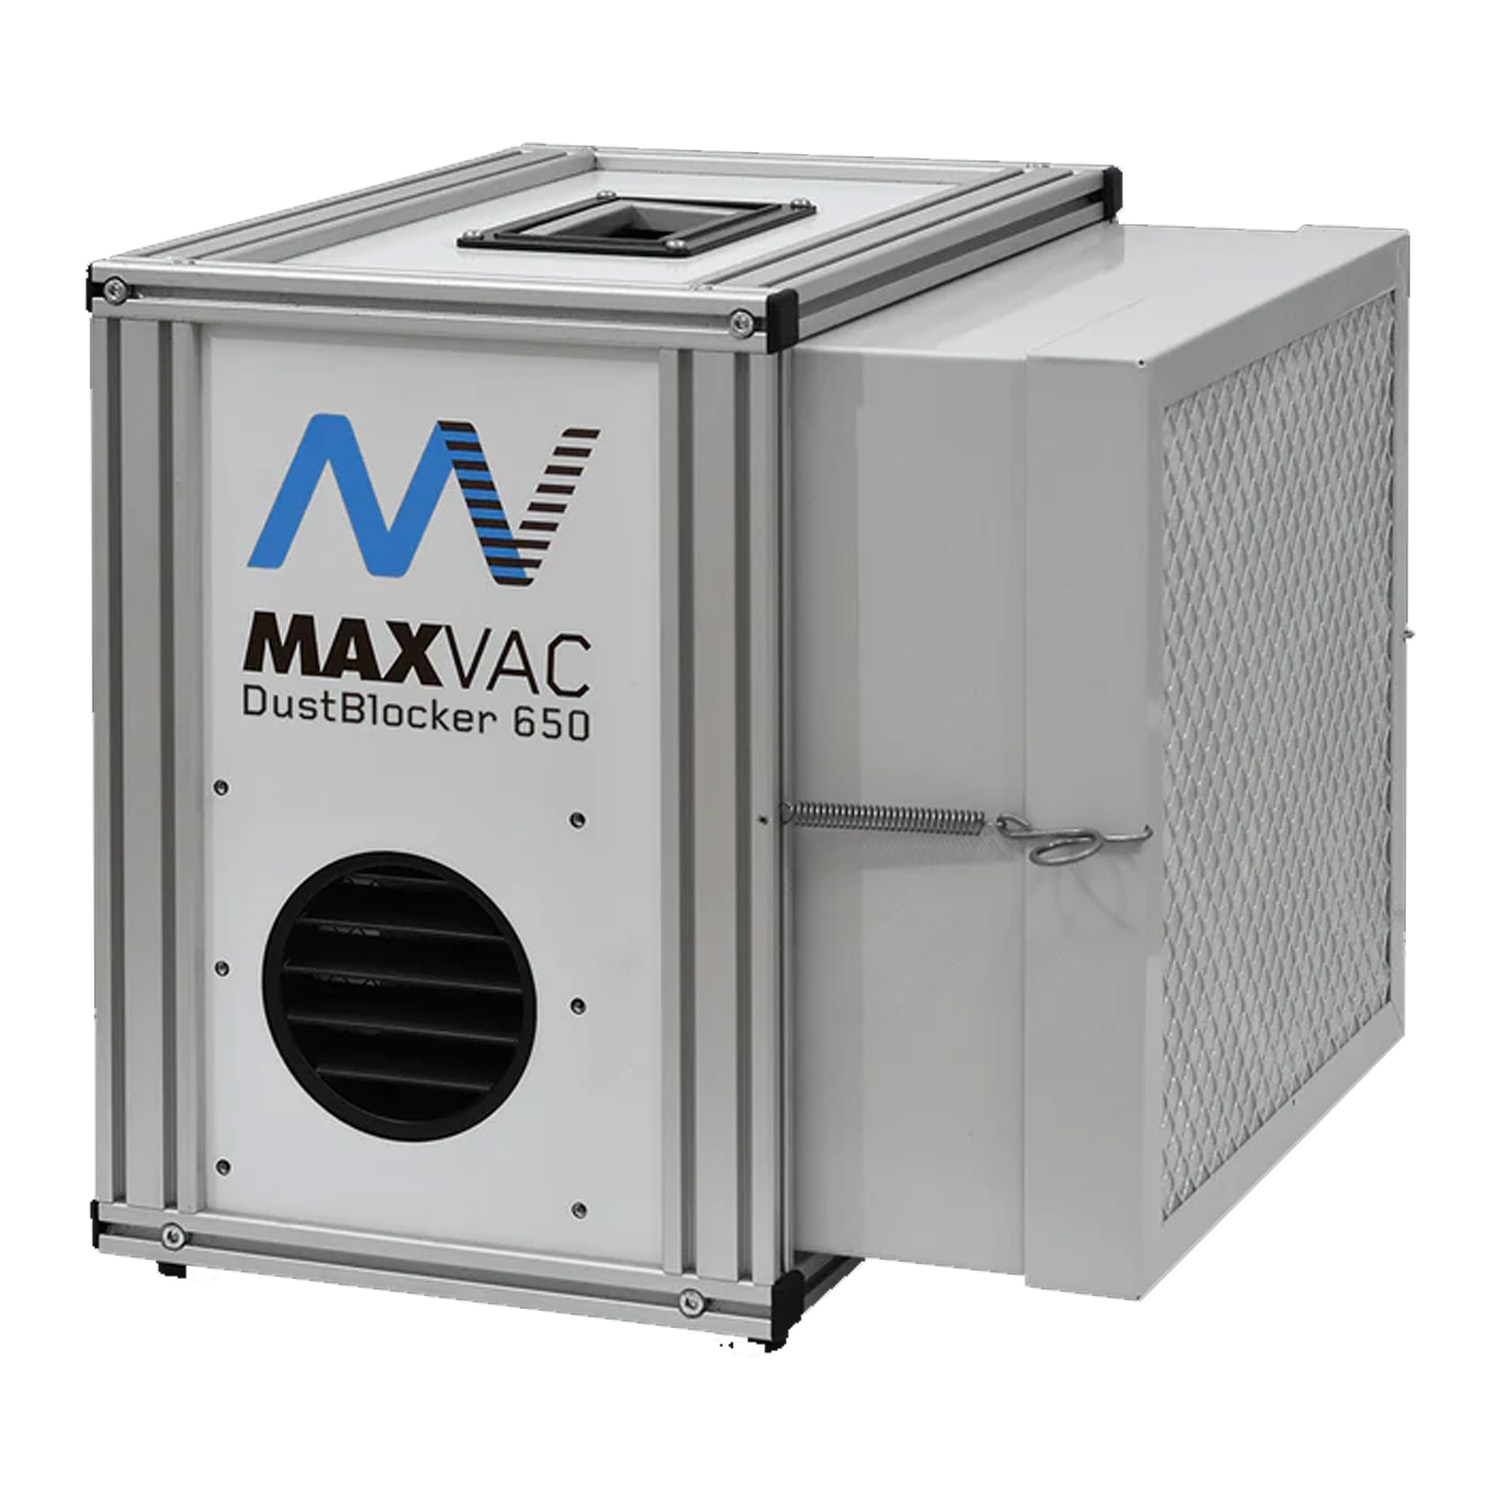 MAXVAC Dustblocker DB450 110/240v Dual Volt Air Cleaner - Protrade